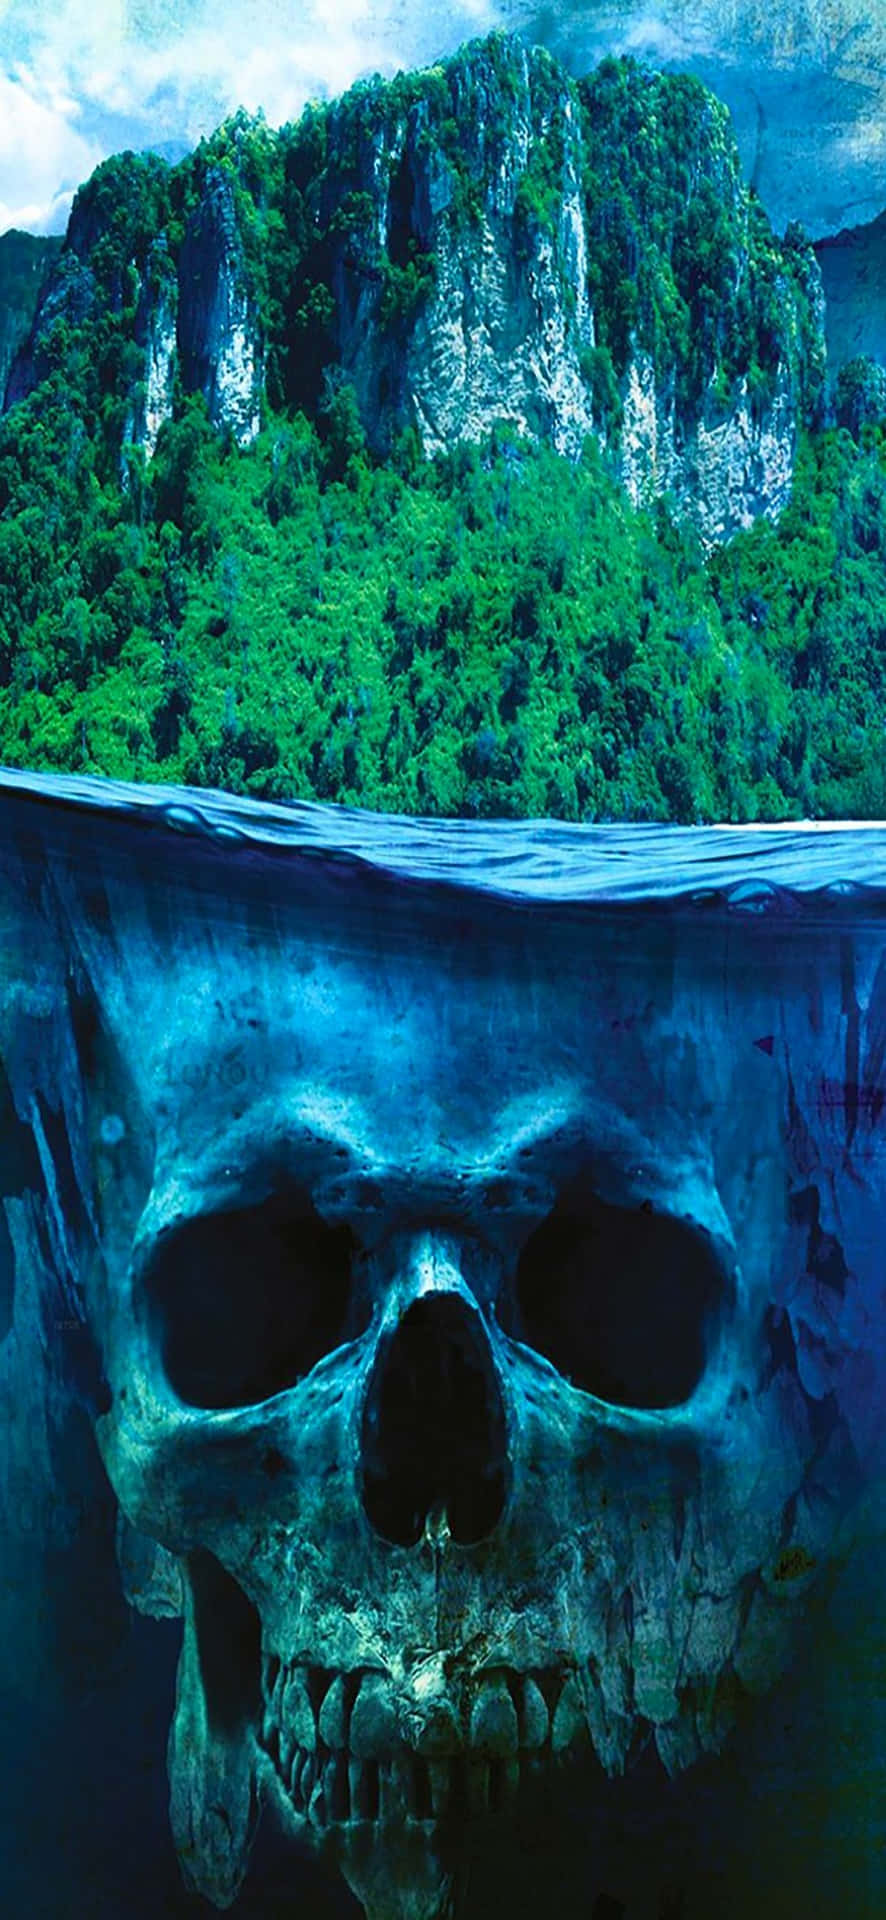 Iphonex Far Cry 3 Rook Islands Skull-bakgrund.